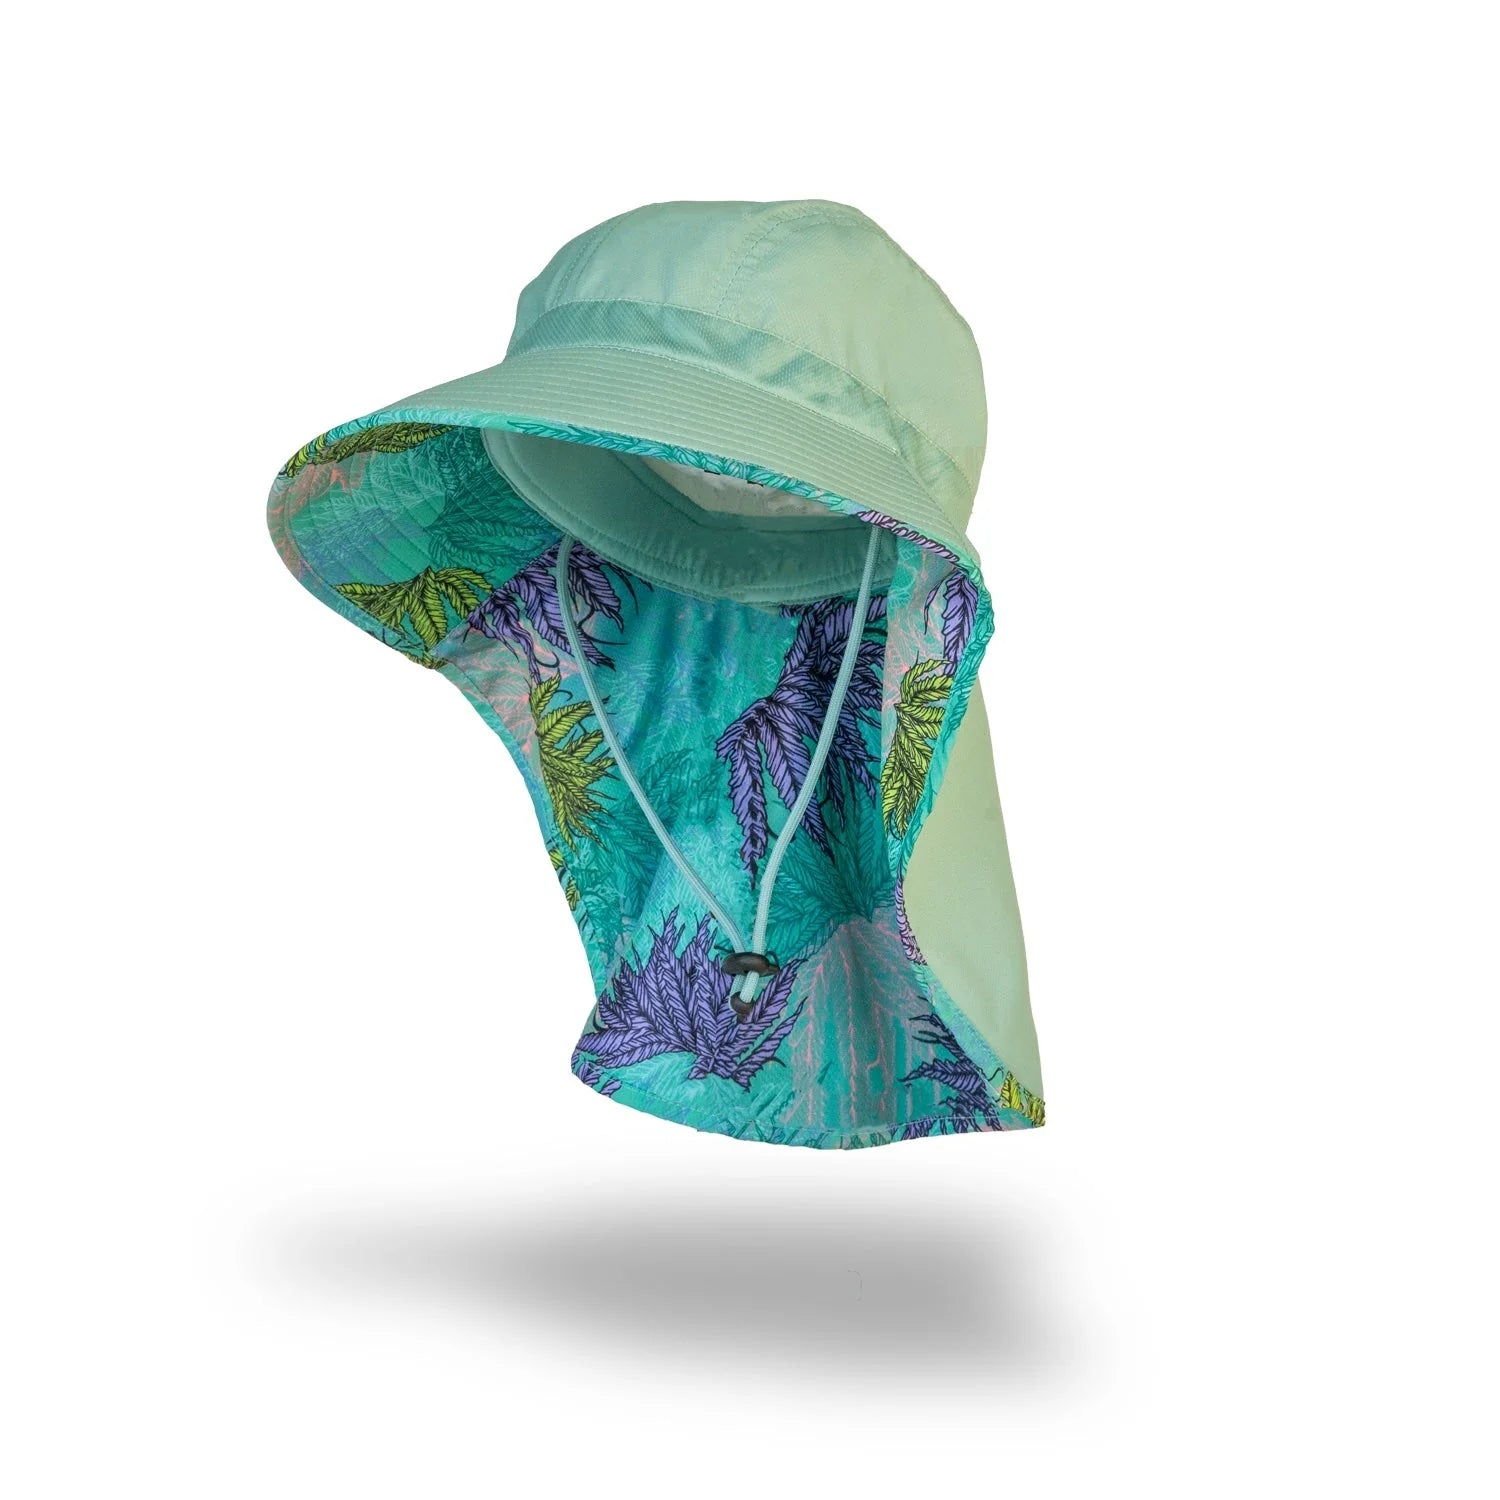 Farmers Defense Sea-Weed Sun Hat